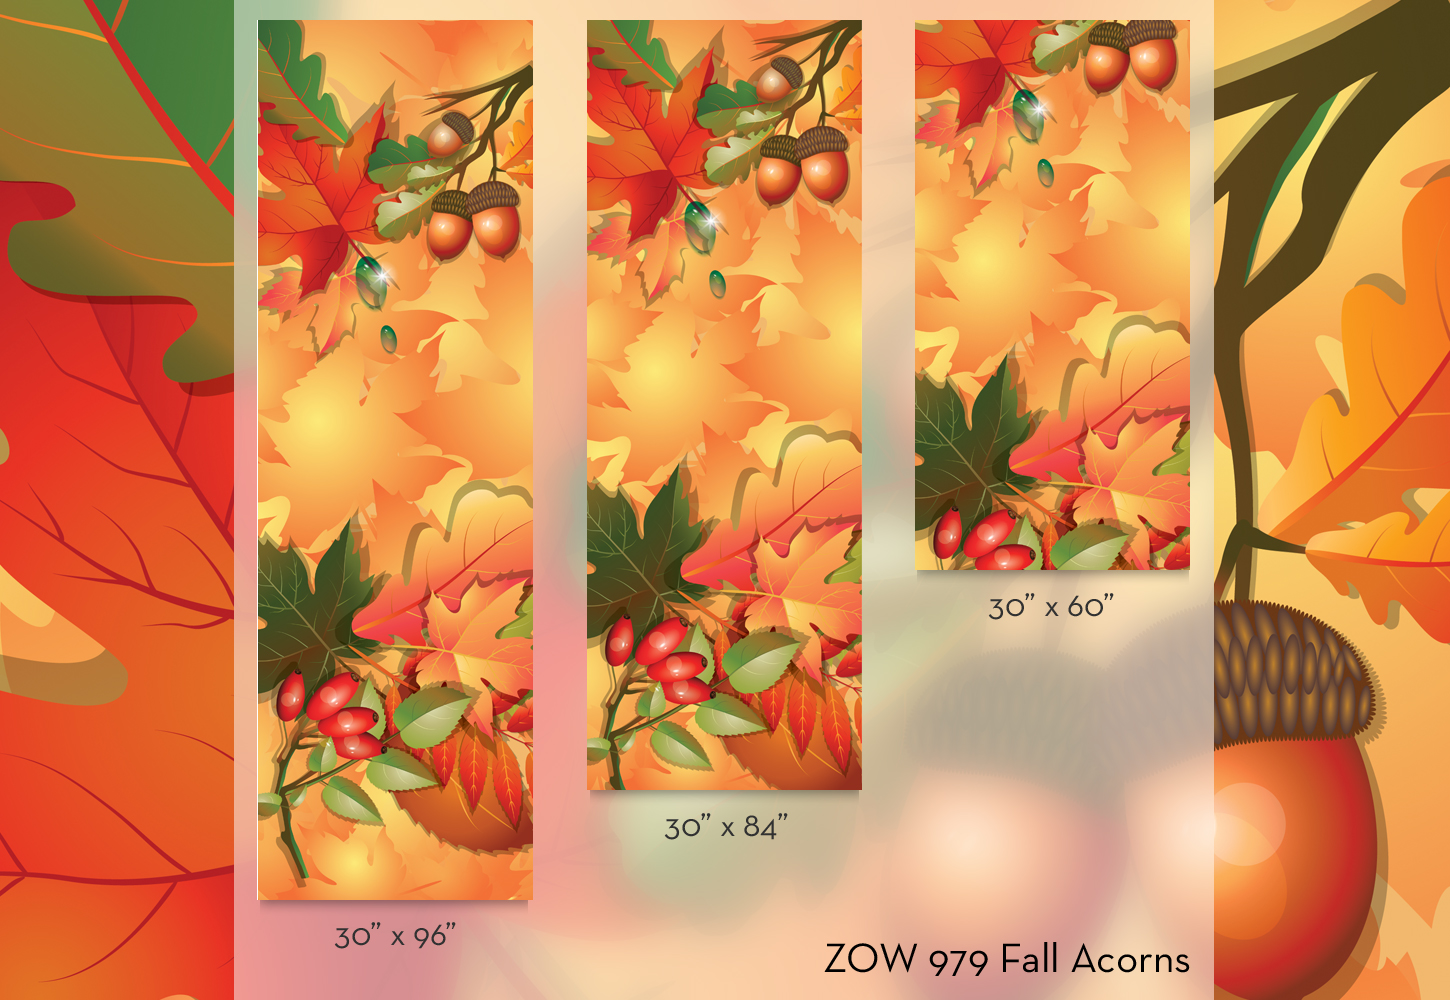 ZOW 979 Fall Acorns